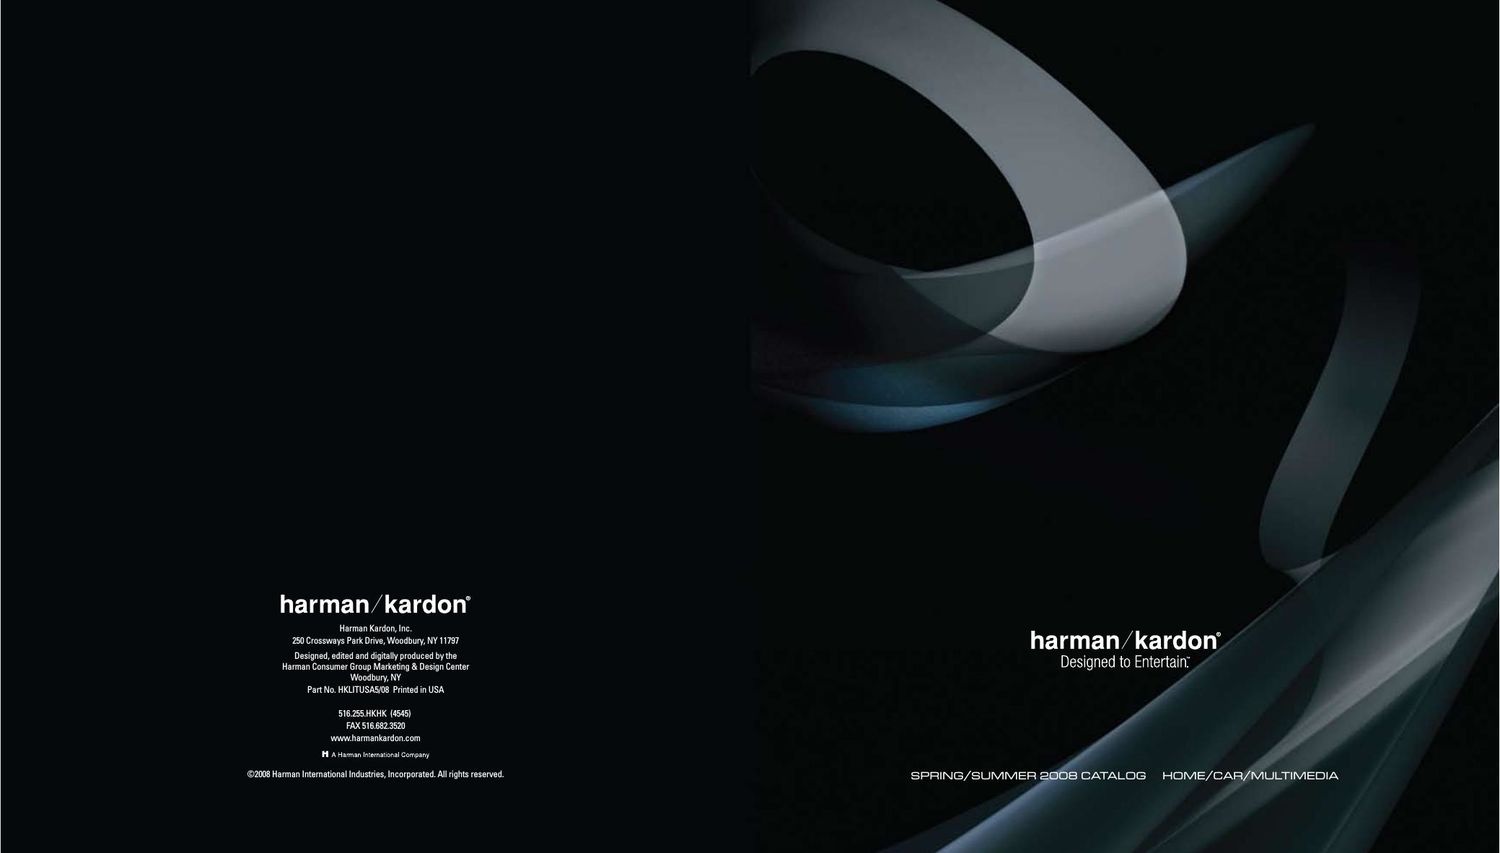 Harman Kardon Catalogue 2008